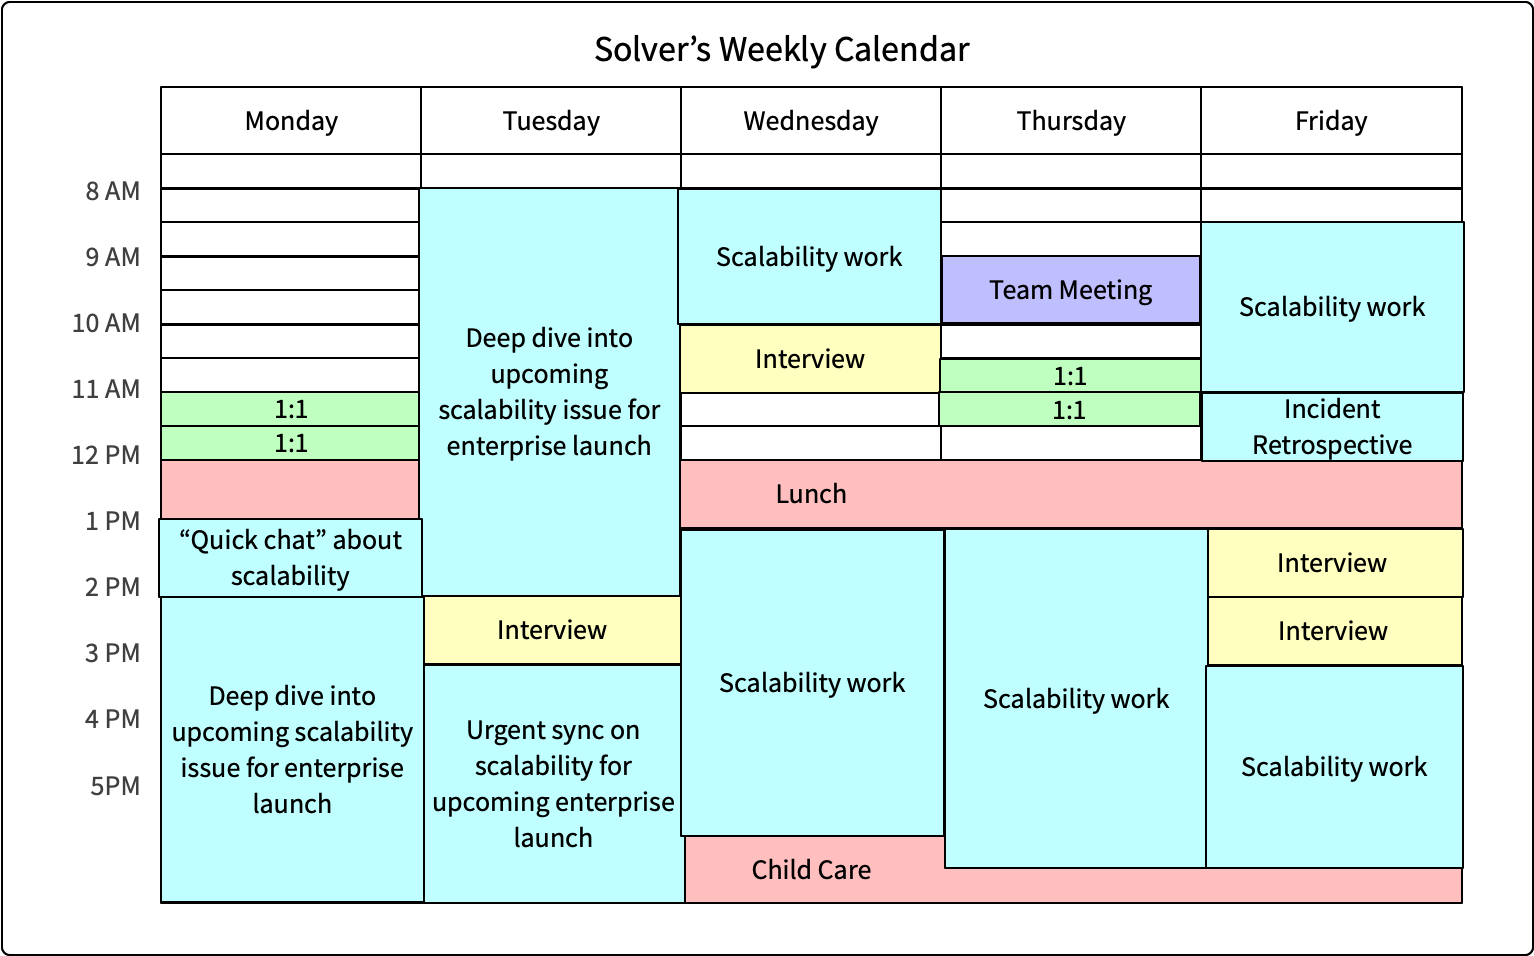 Example calendar for Solver archetype